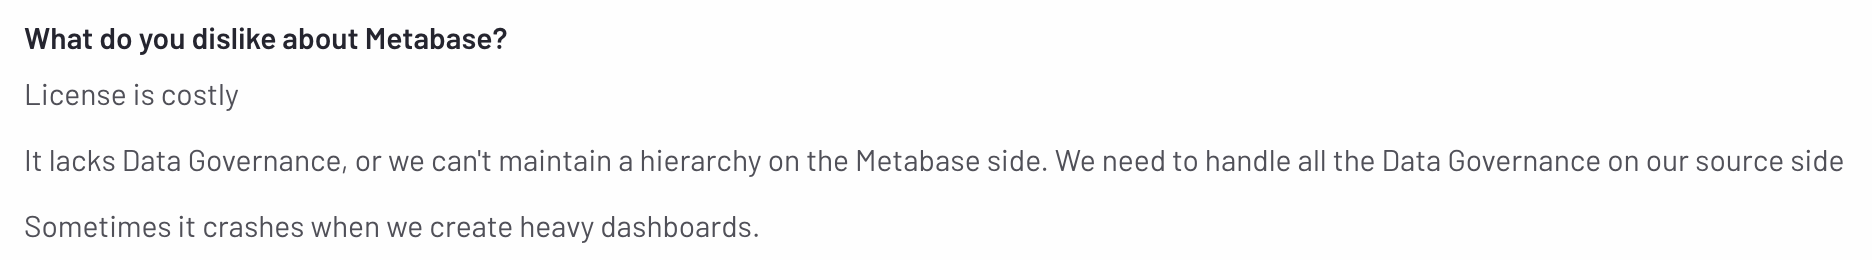 dislike metabase